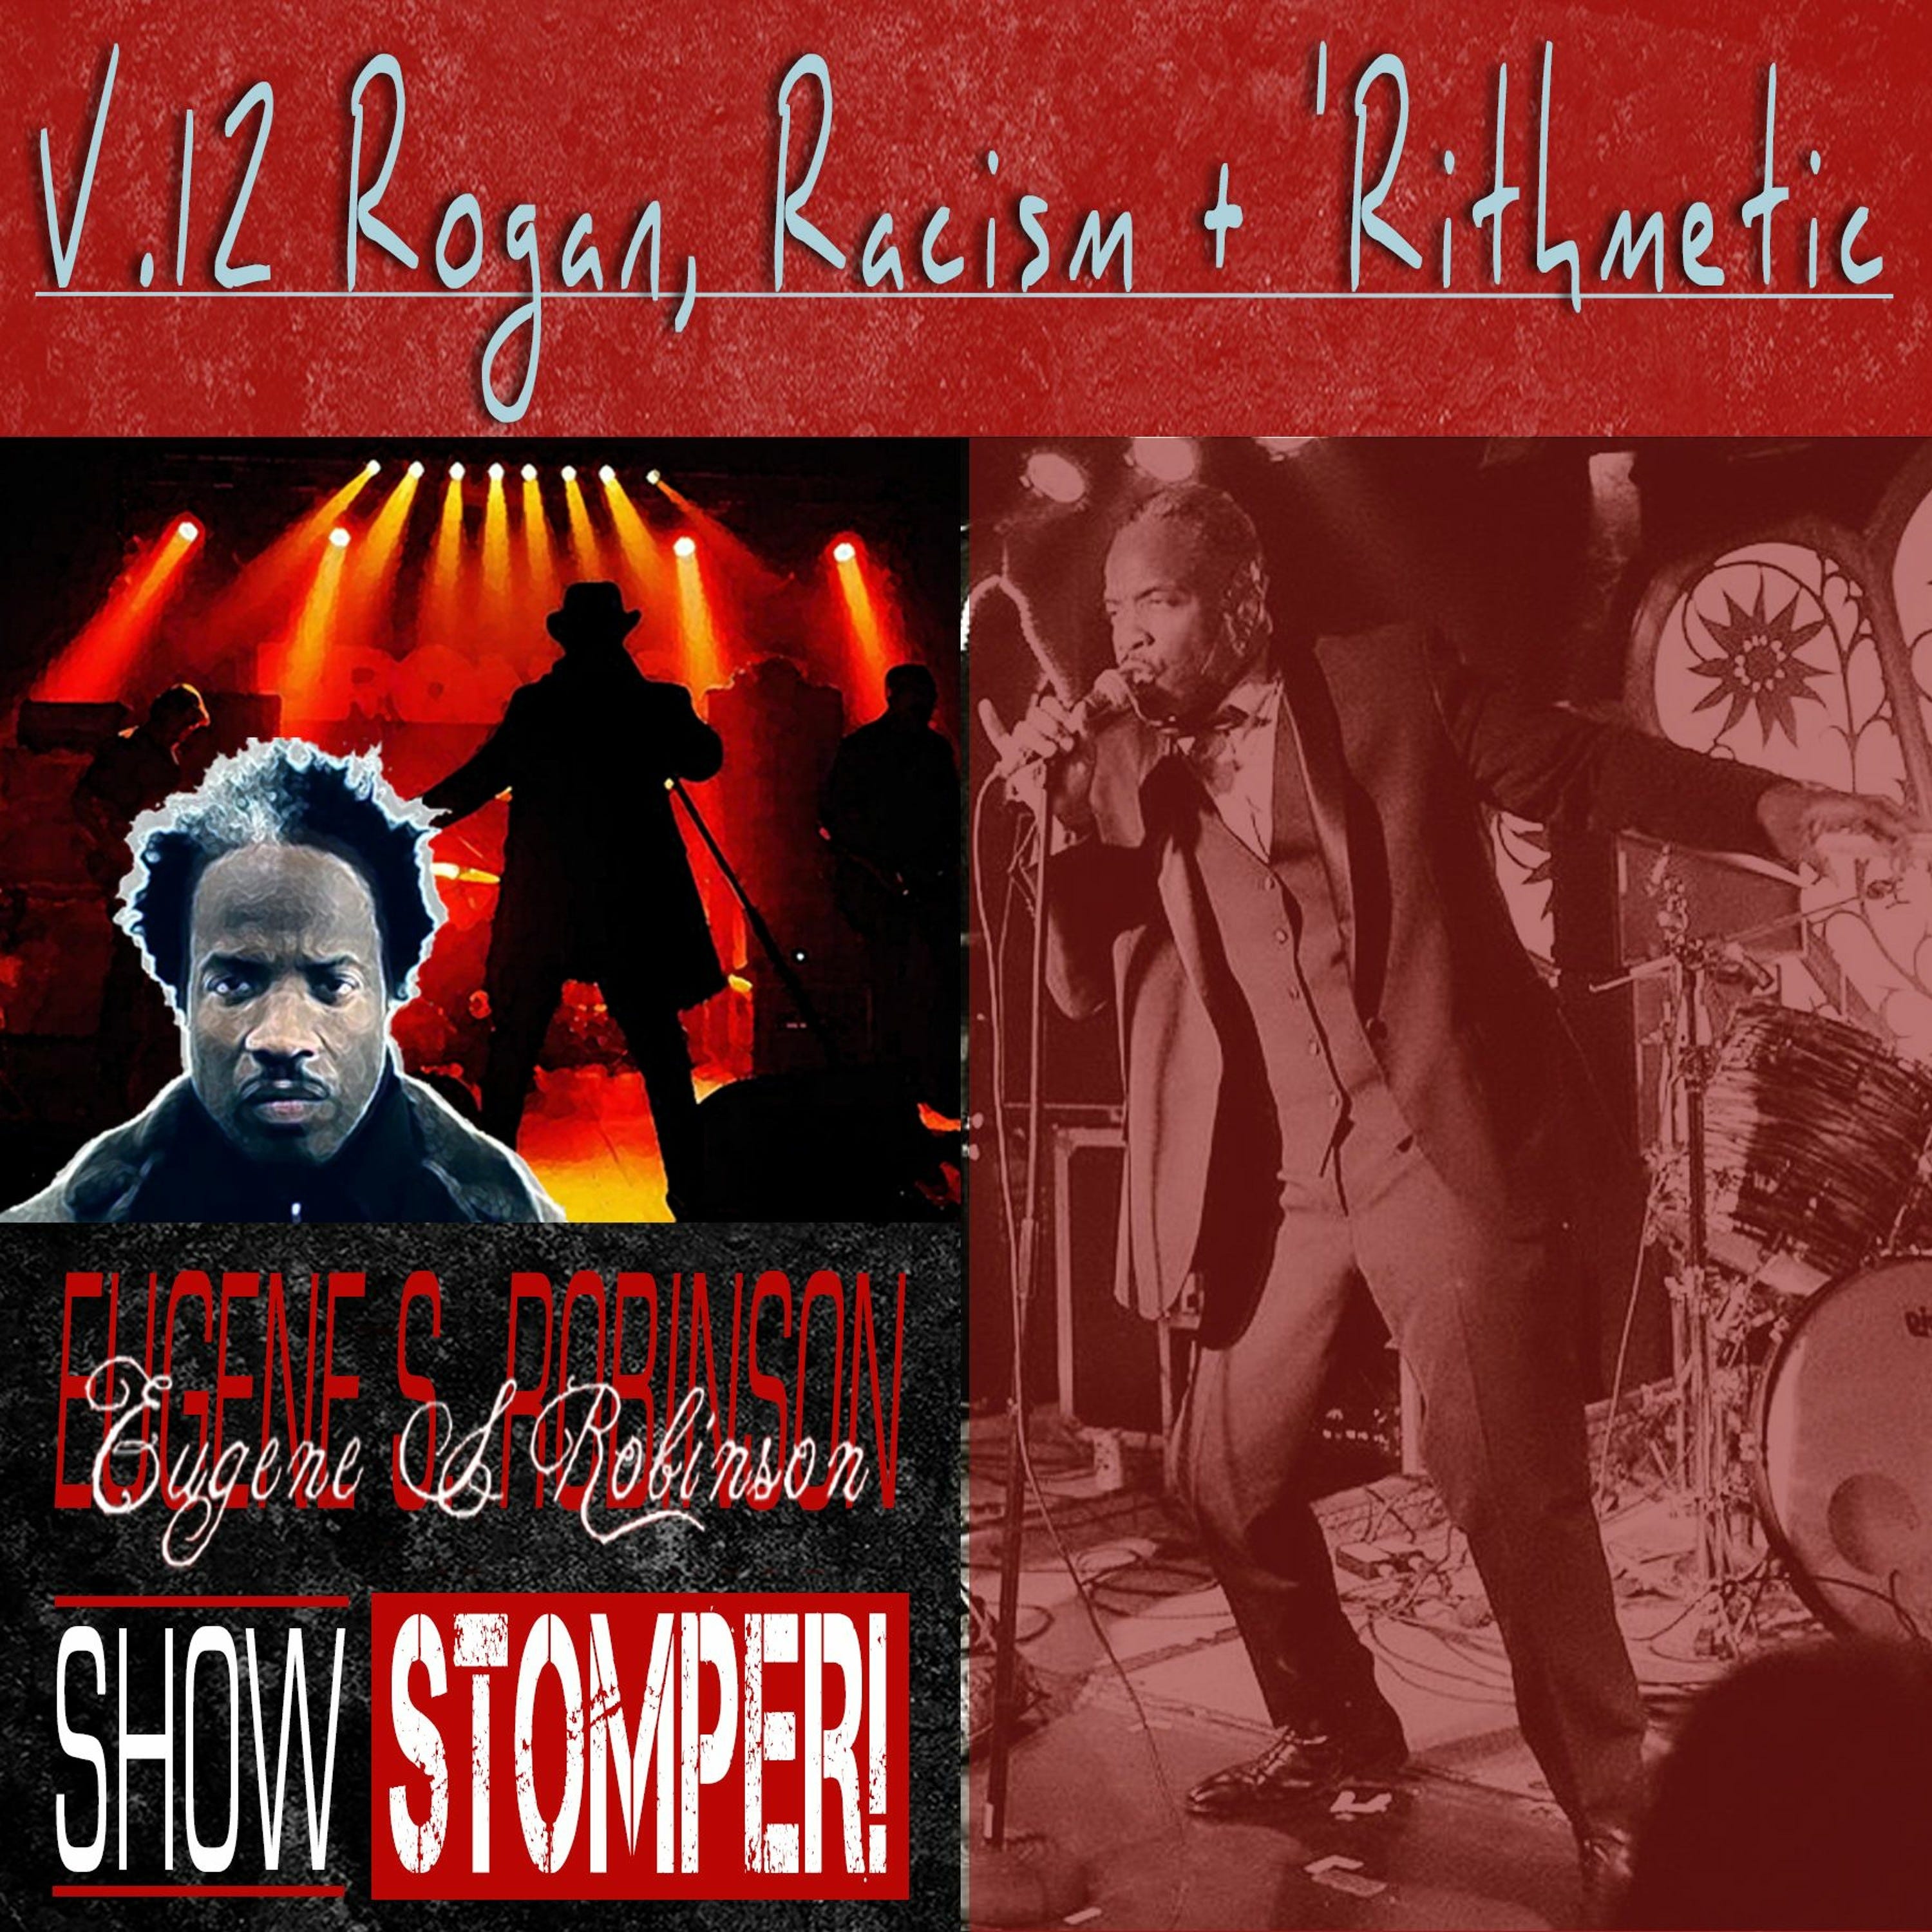 The Eugene S. Robinson Show Stomper! V.12: Rogan Racism + Rithmetic